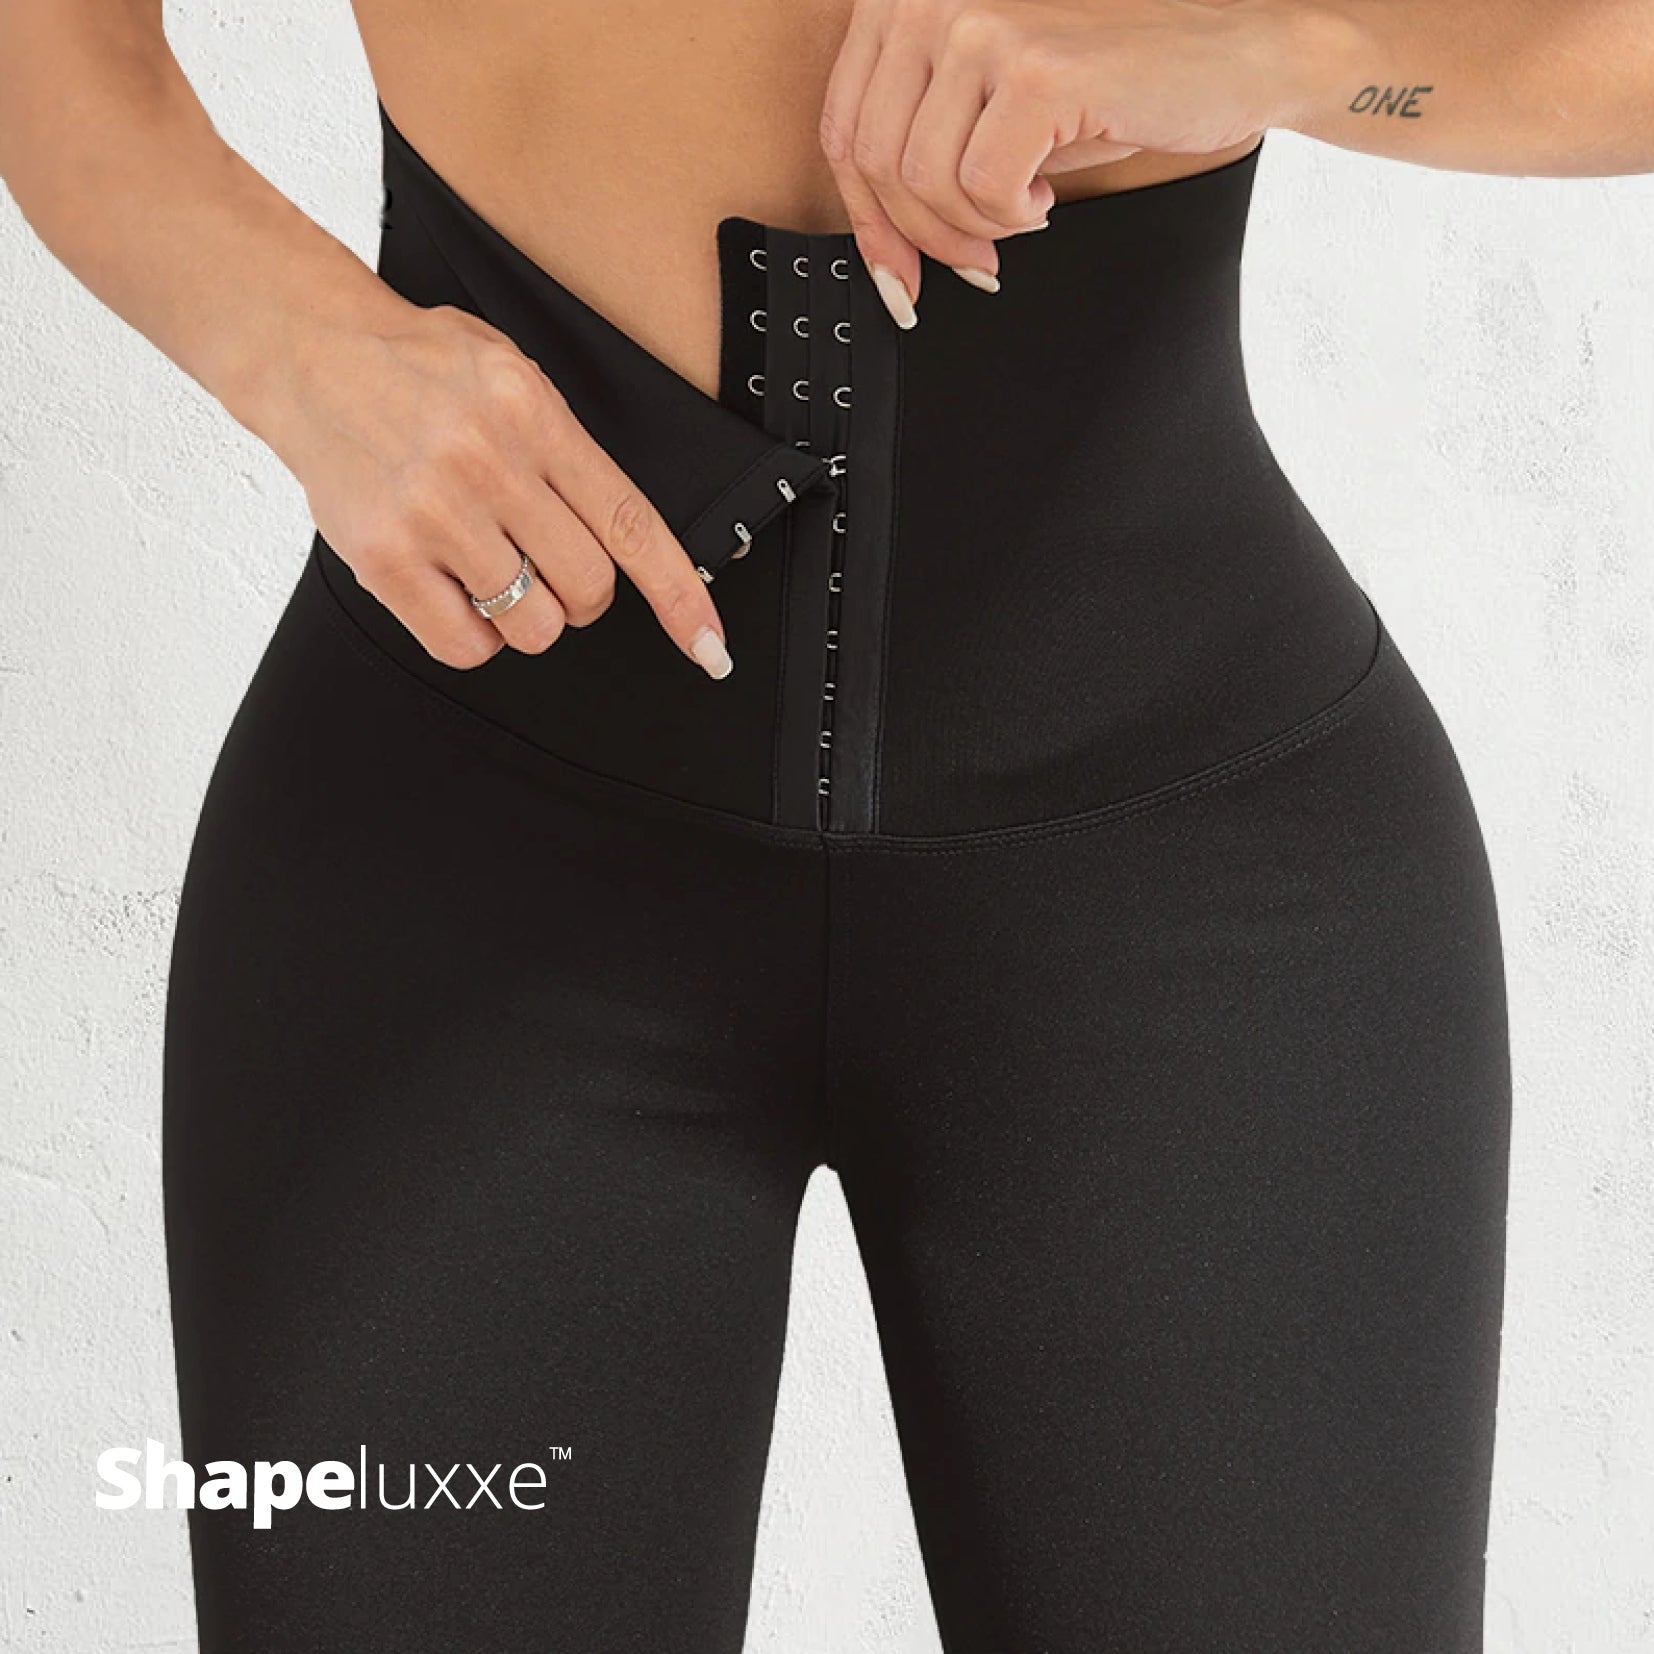 Shapeluxxe™ slimming high-waisted corset leggings